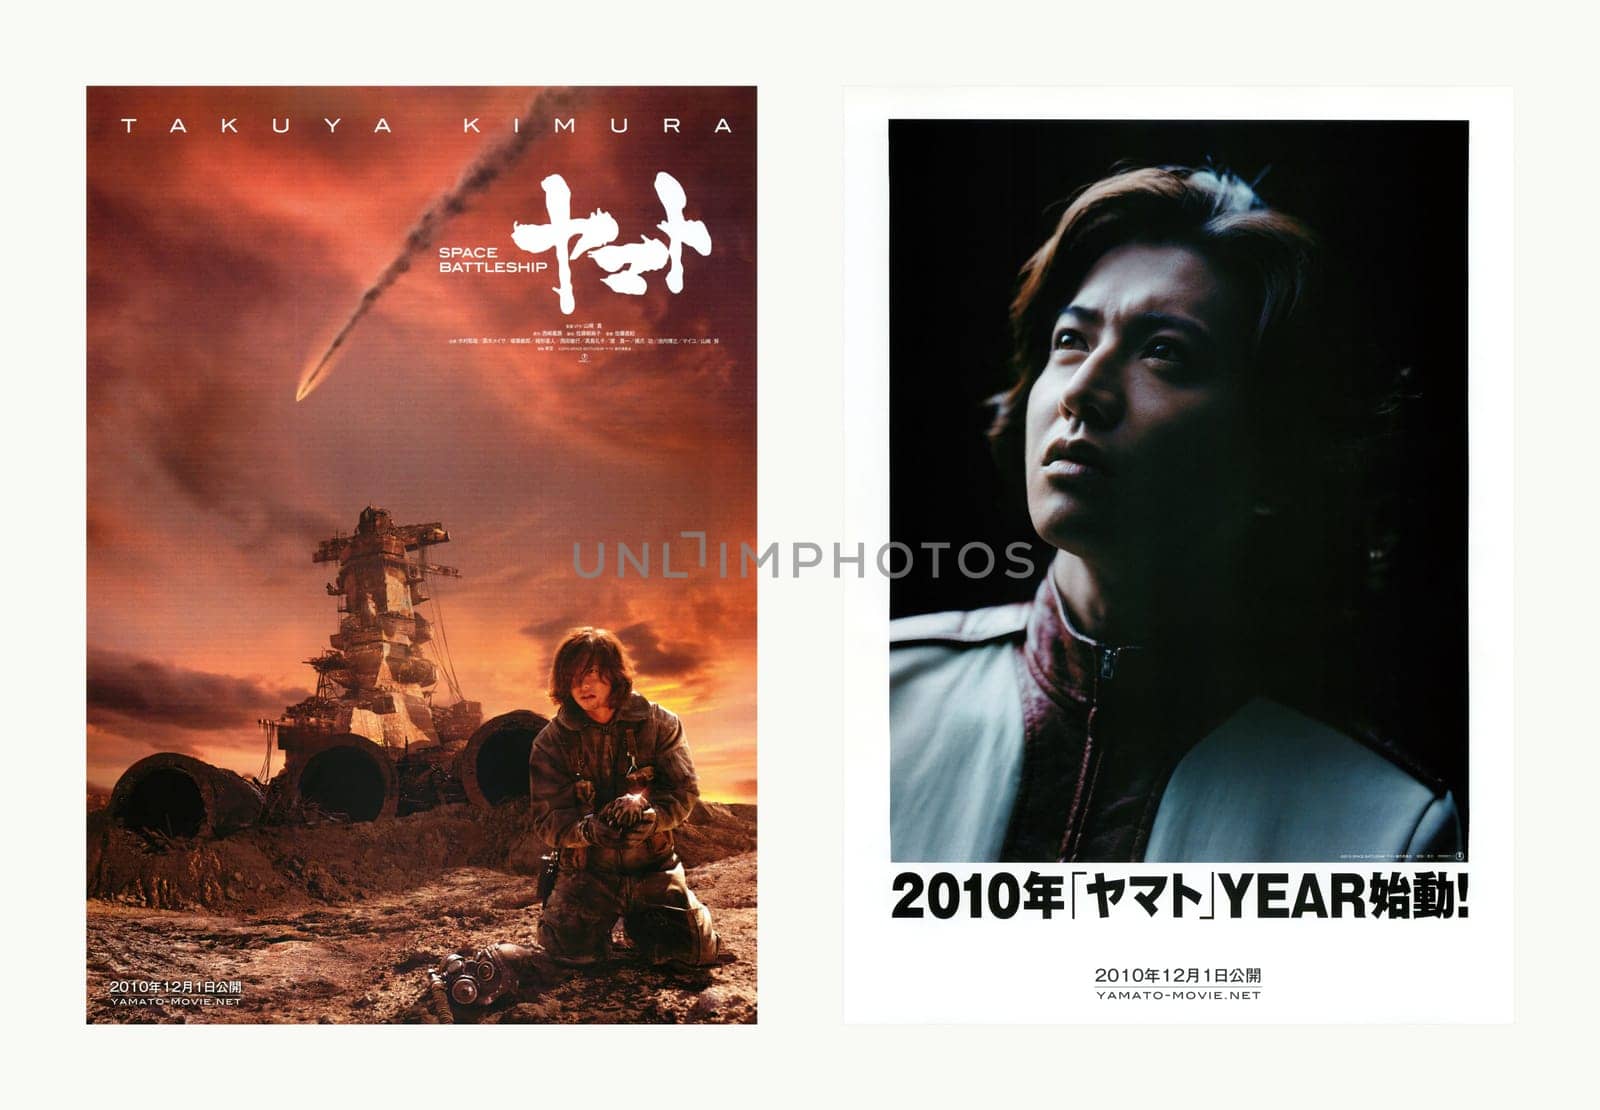 tokyo, japan - dec 1 2010: 1st visual teaser flyer of the film based on the Japanese anime "Space Battleship Yamato" adapted by Takashi Yamazaki and starring idol Takuya Kimura from SMAP (left: front)